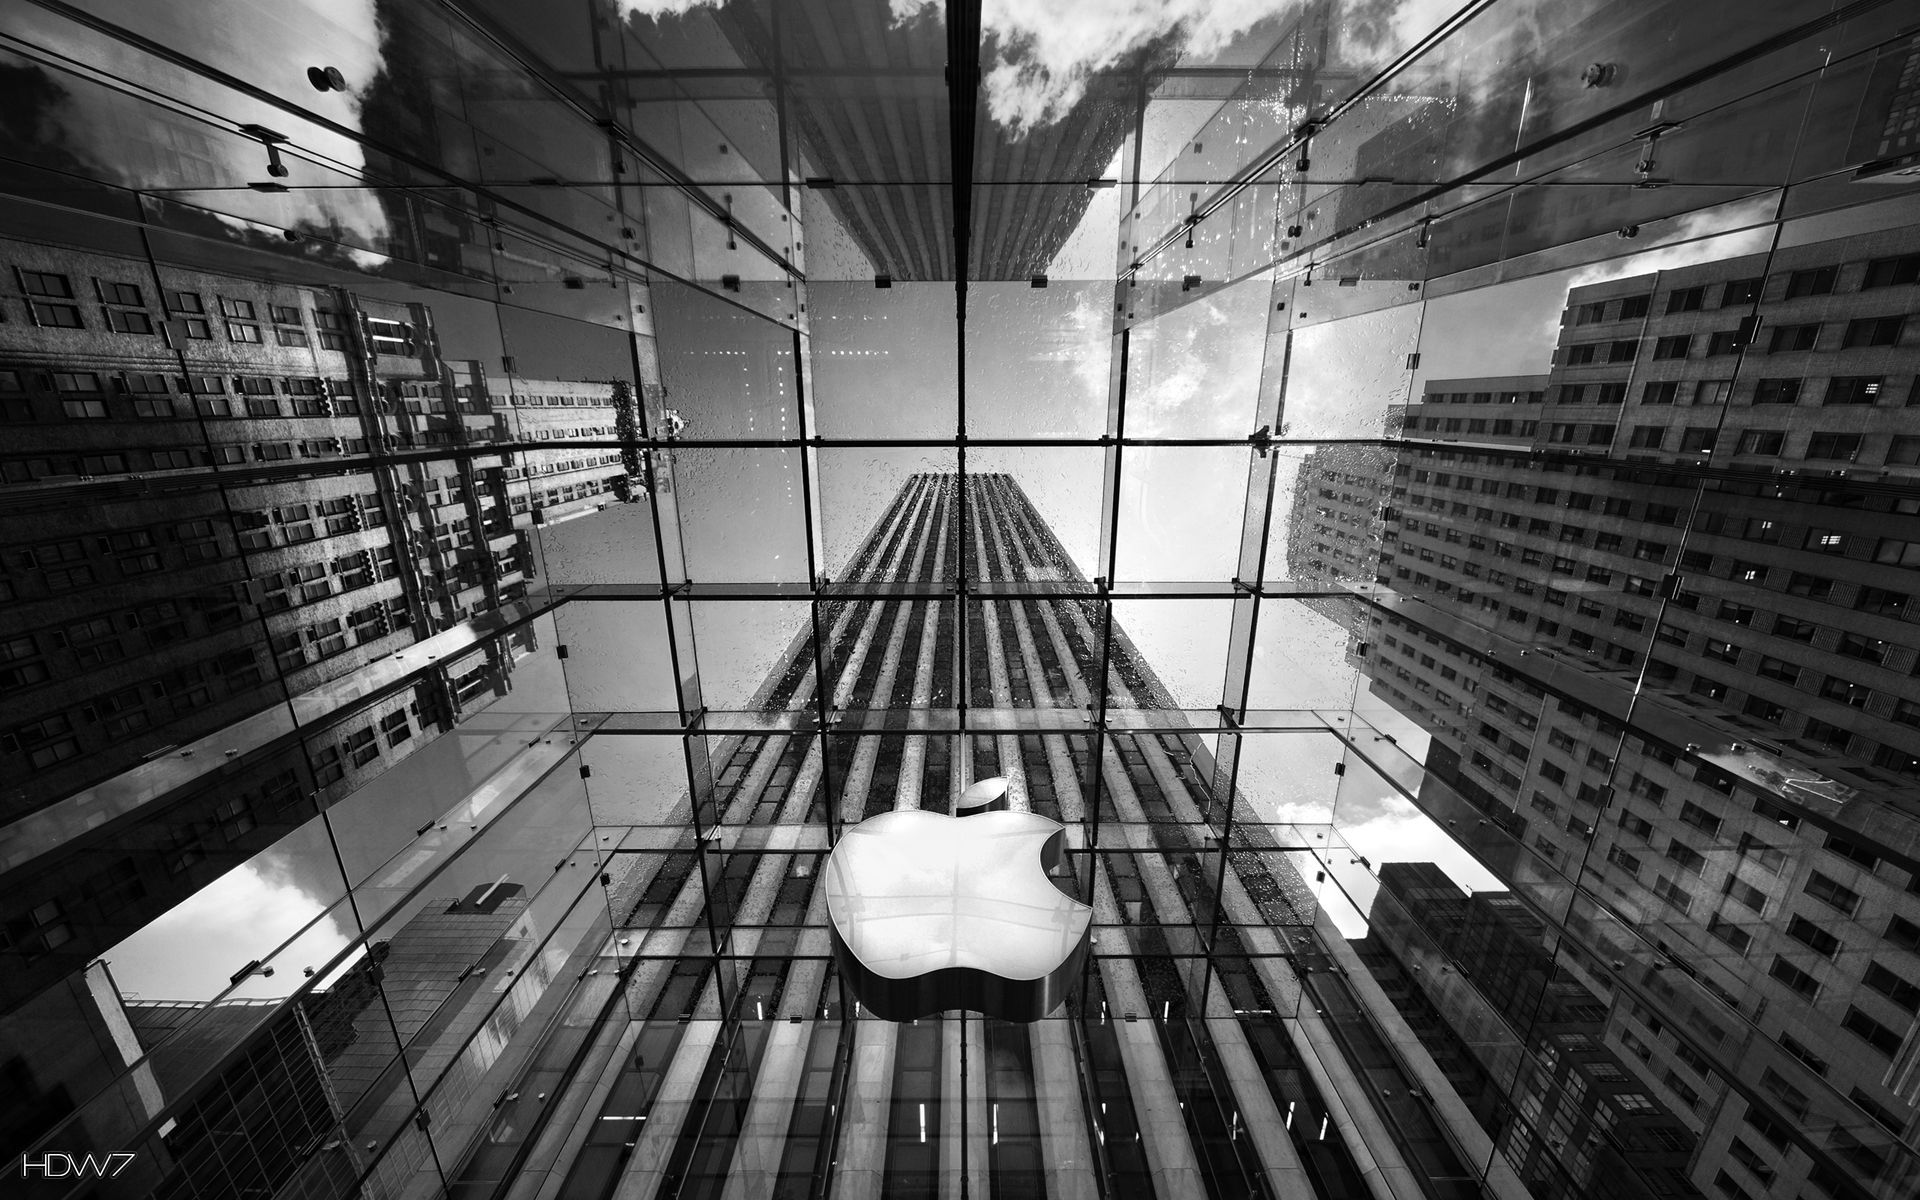 architecture apple inc mac building .hdw7.com